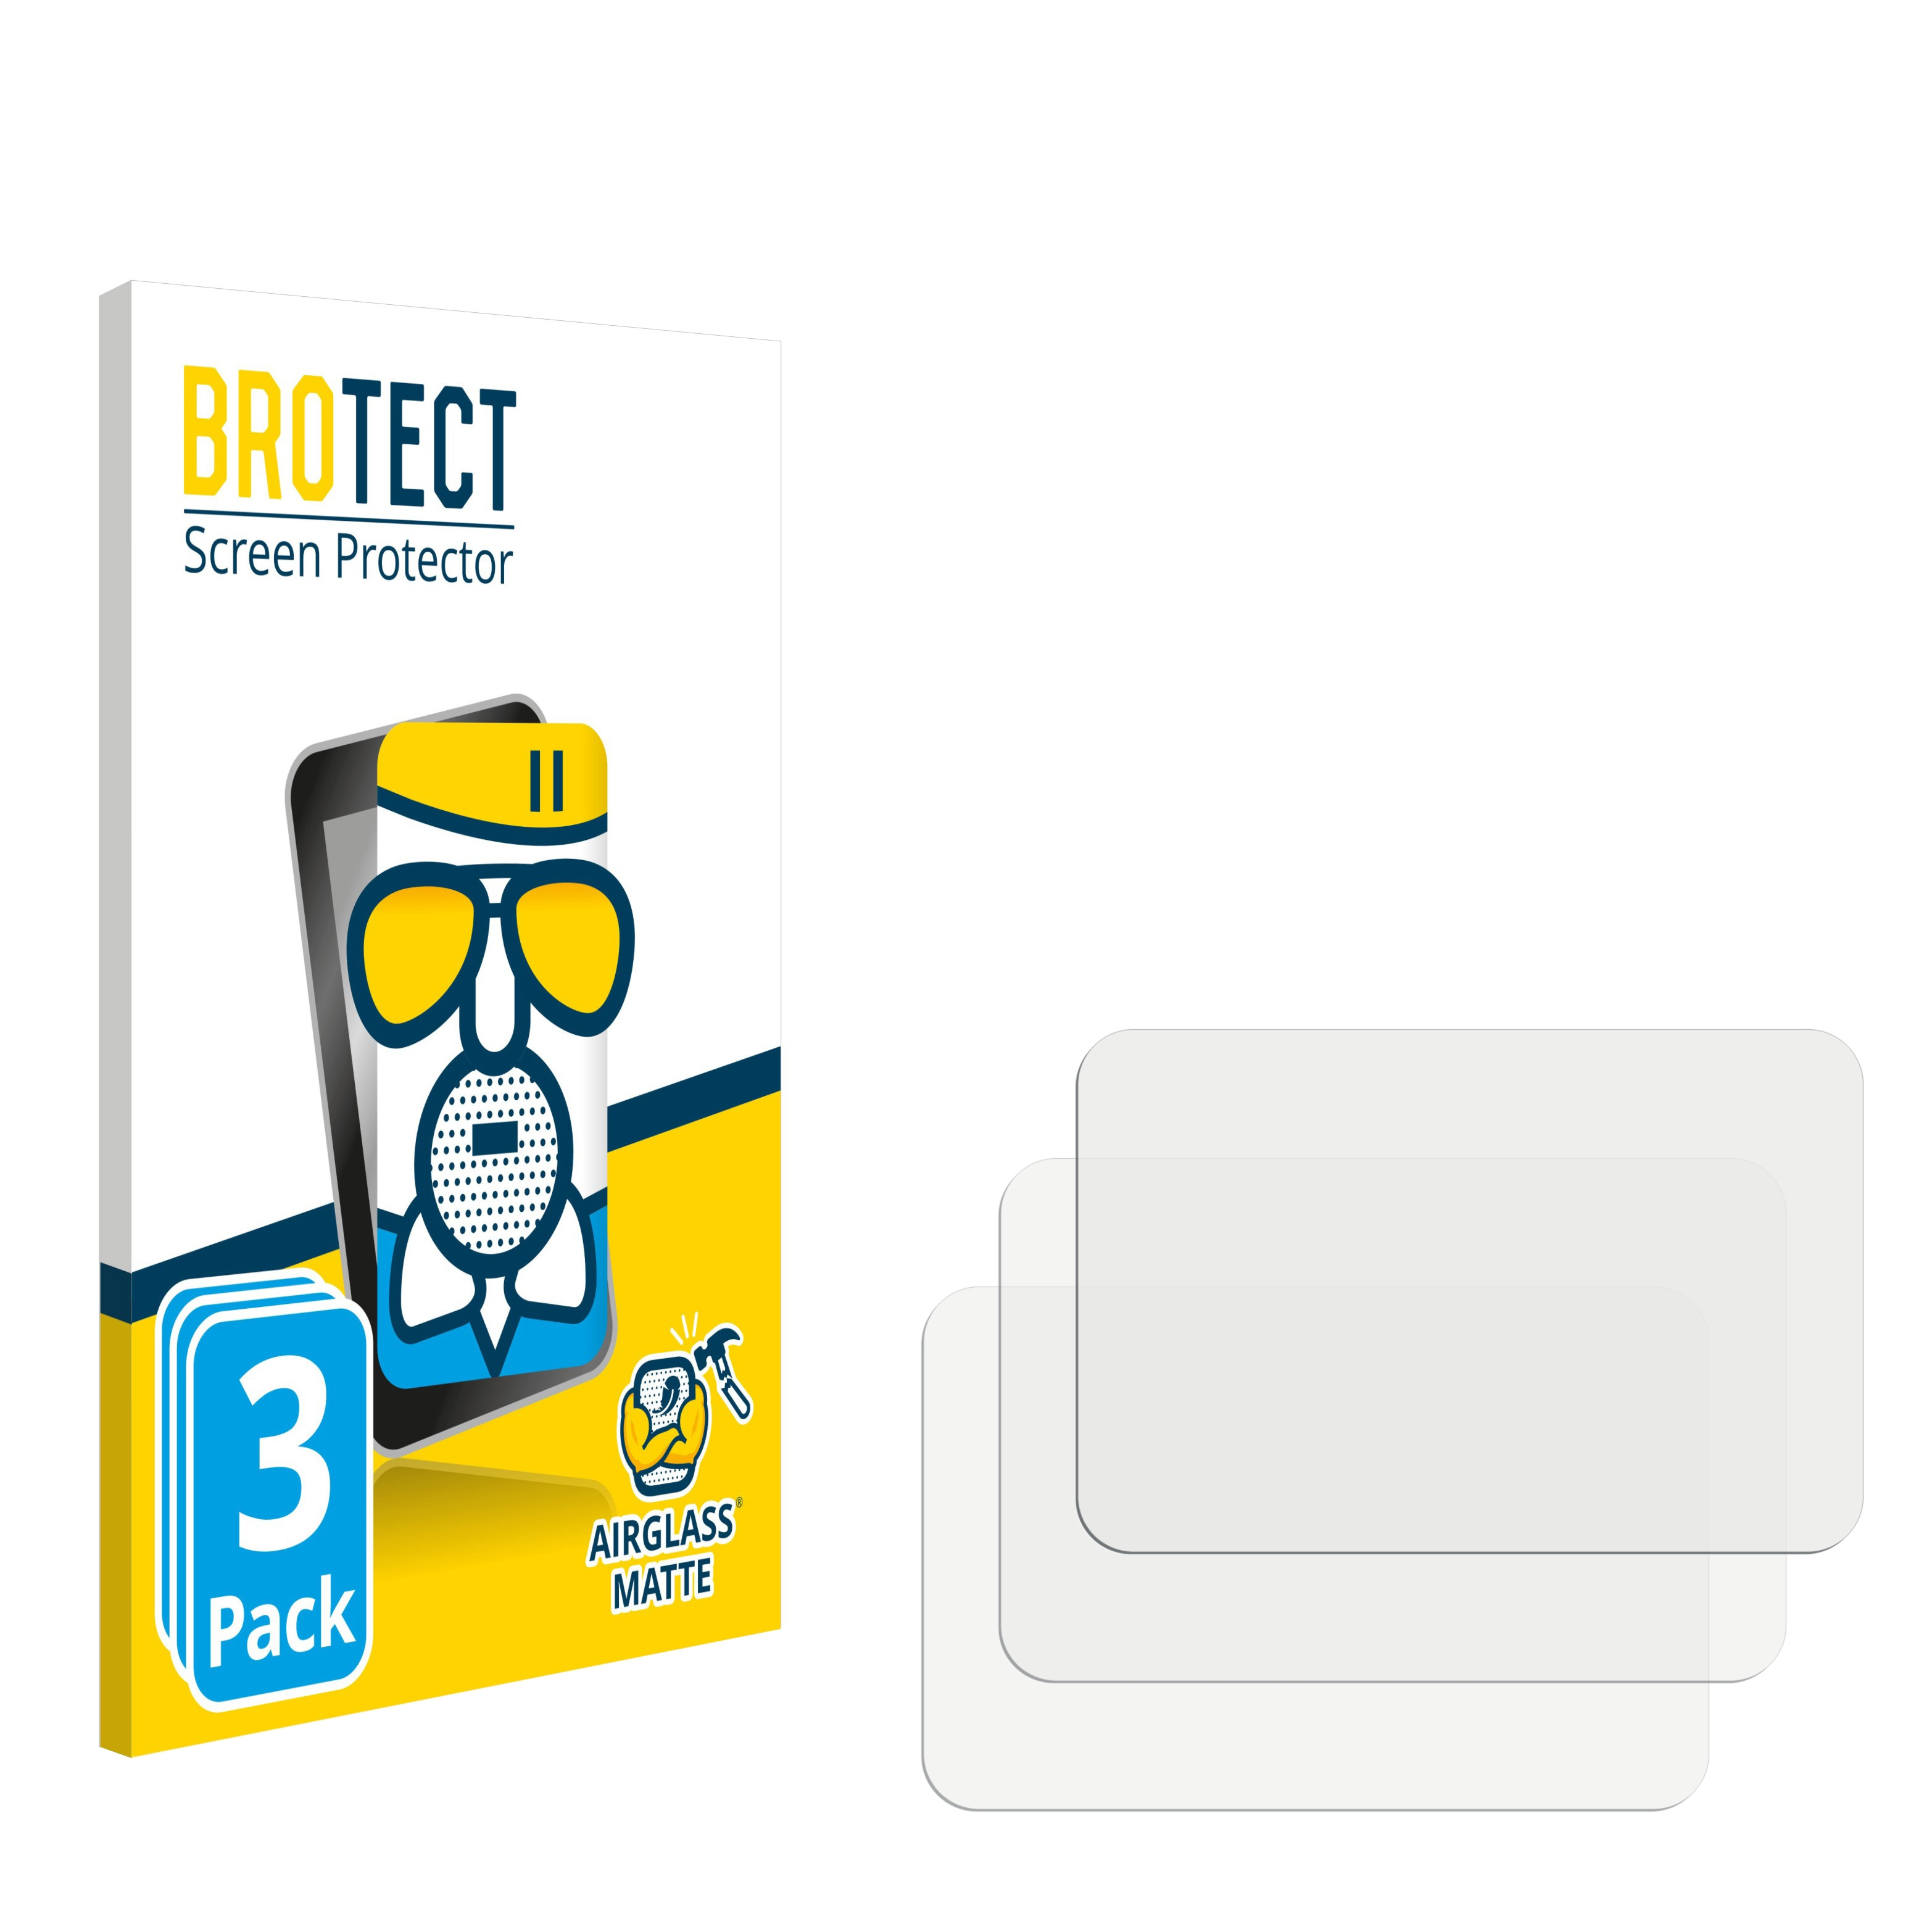 RDKS-Tablet) Airglass Ateq BROTECT matte VT67 Schutzfolie(für 3x